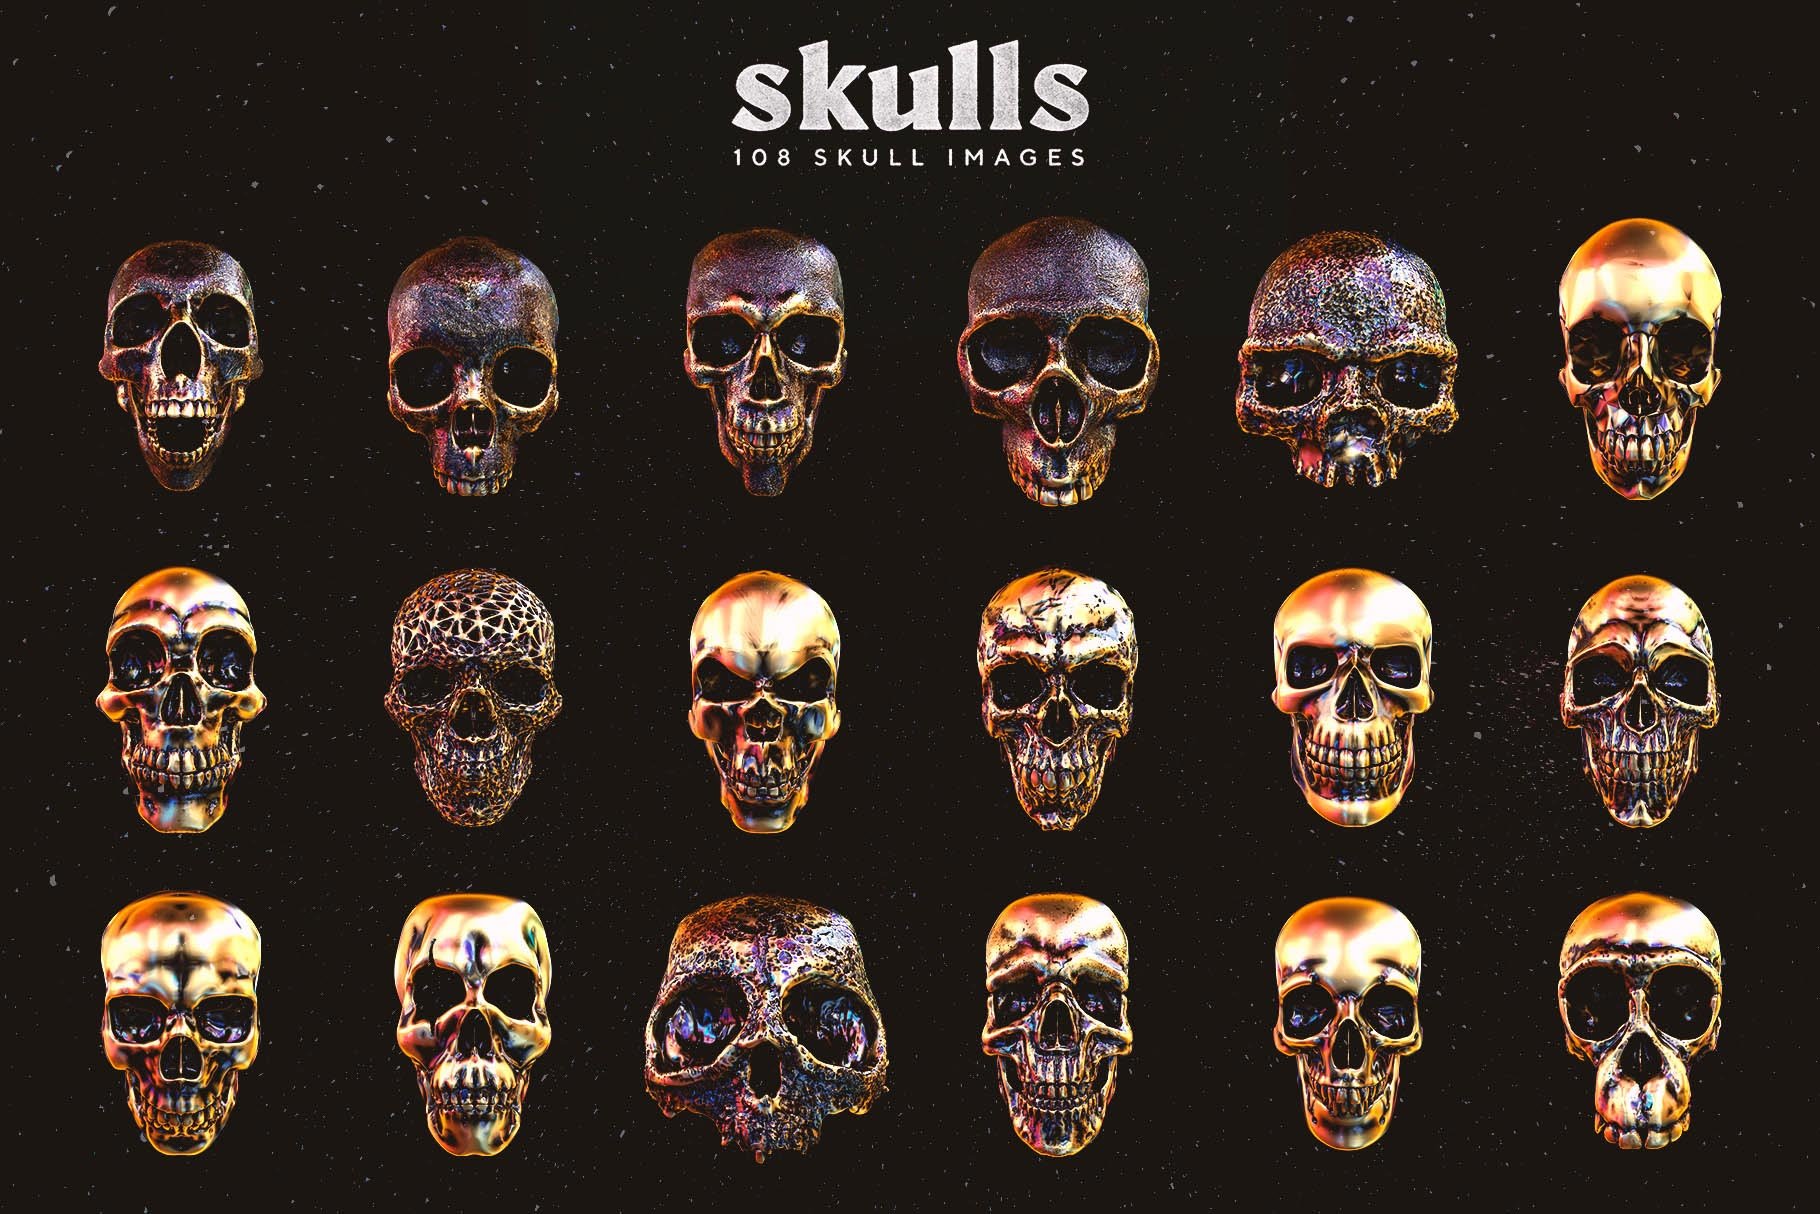 Skulls 108个高分辨率骷髅头骨逼真骨骼金属纹理PNG素材 图片素材 第7张